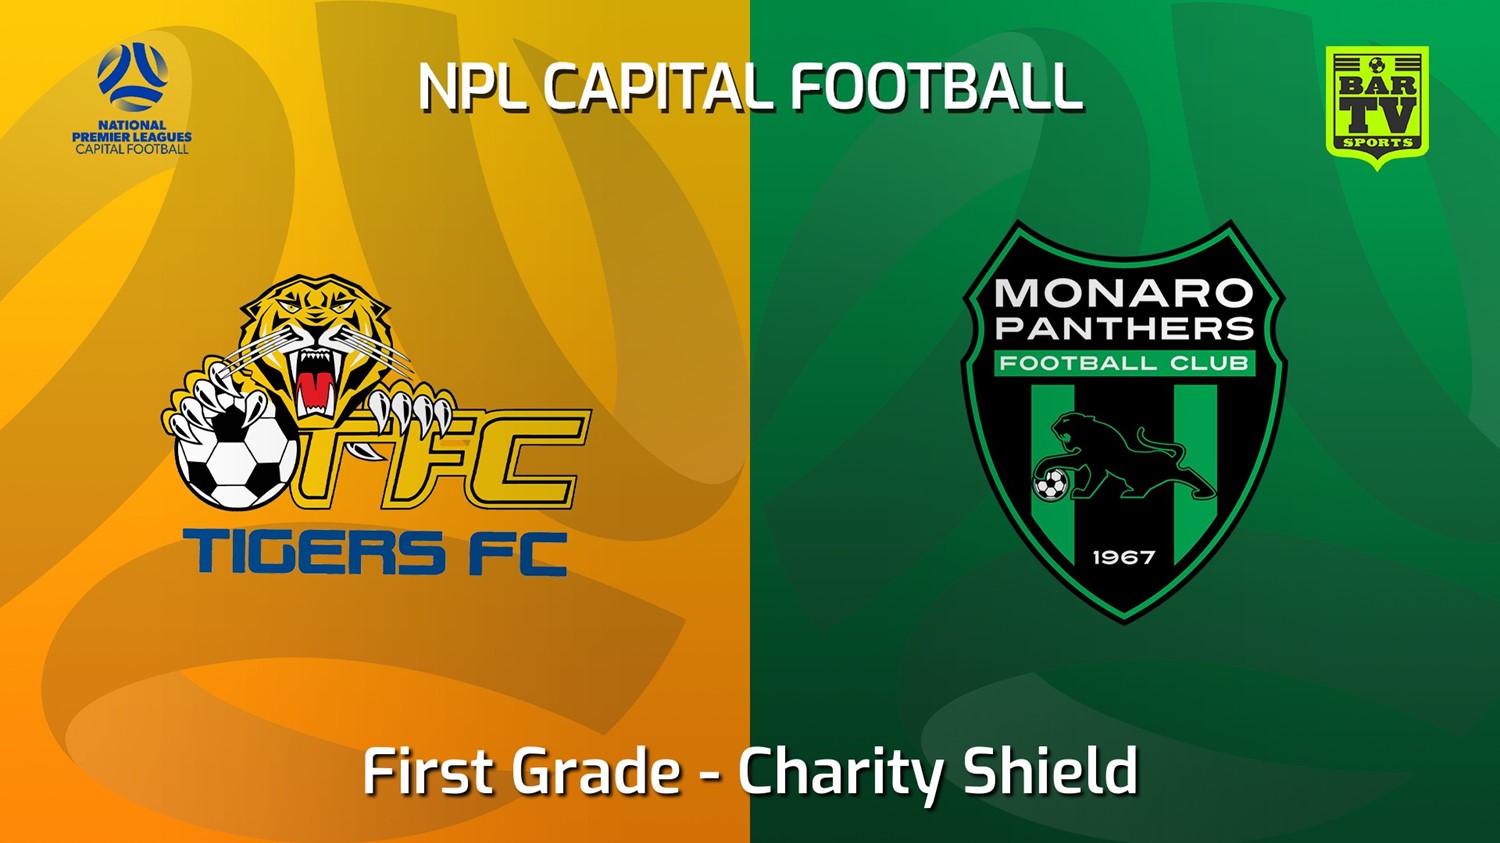 220305-Capital NPL Charity Shield - Tigers FC v Monaro Panthers FC (1) Minigame Slate Image